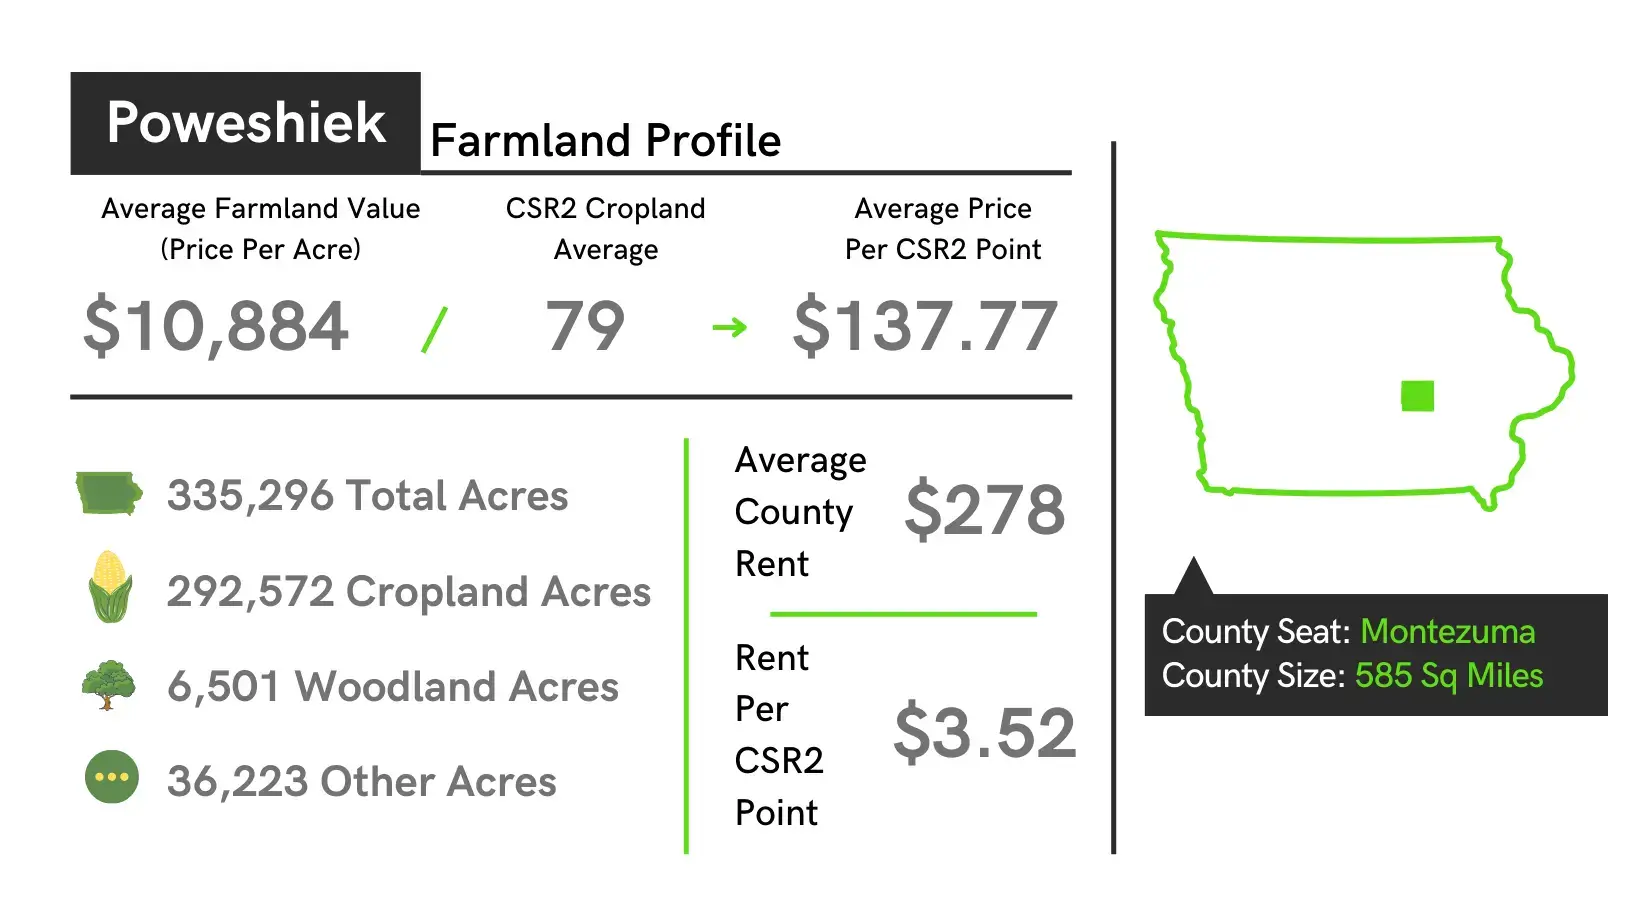 Poweshiek County Farmland Profile